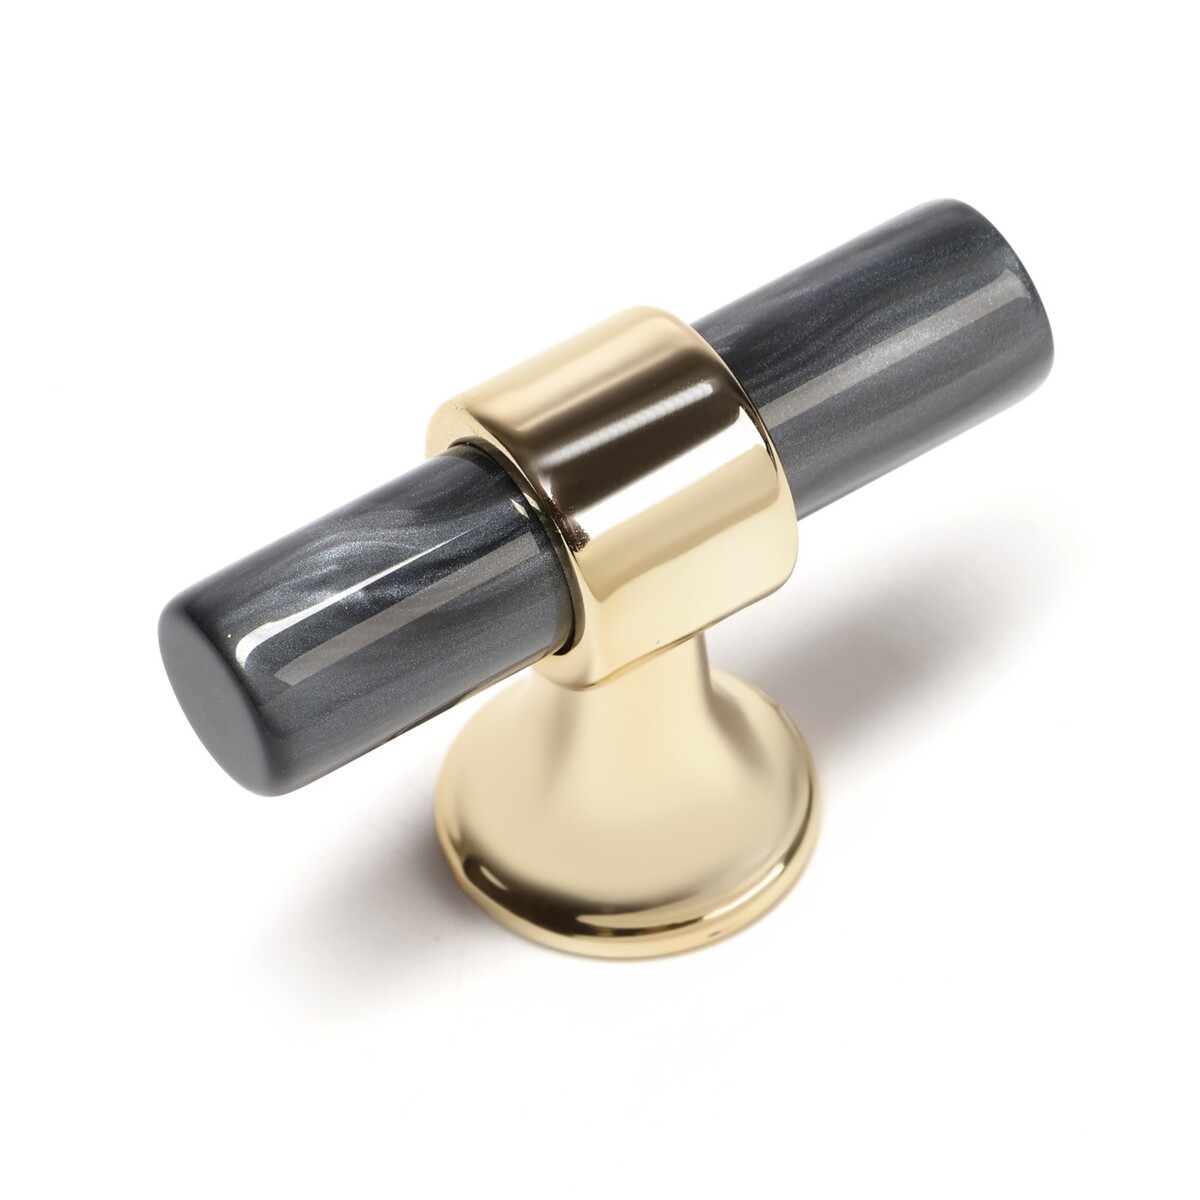 Ручка кнопка cappio pk106, d=12 мм, пластик, цвет графит/золото ручка кнопка cappio d 44 мм h 20 мм латунь золото